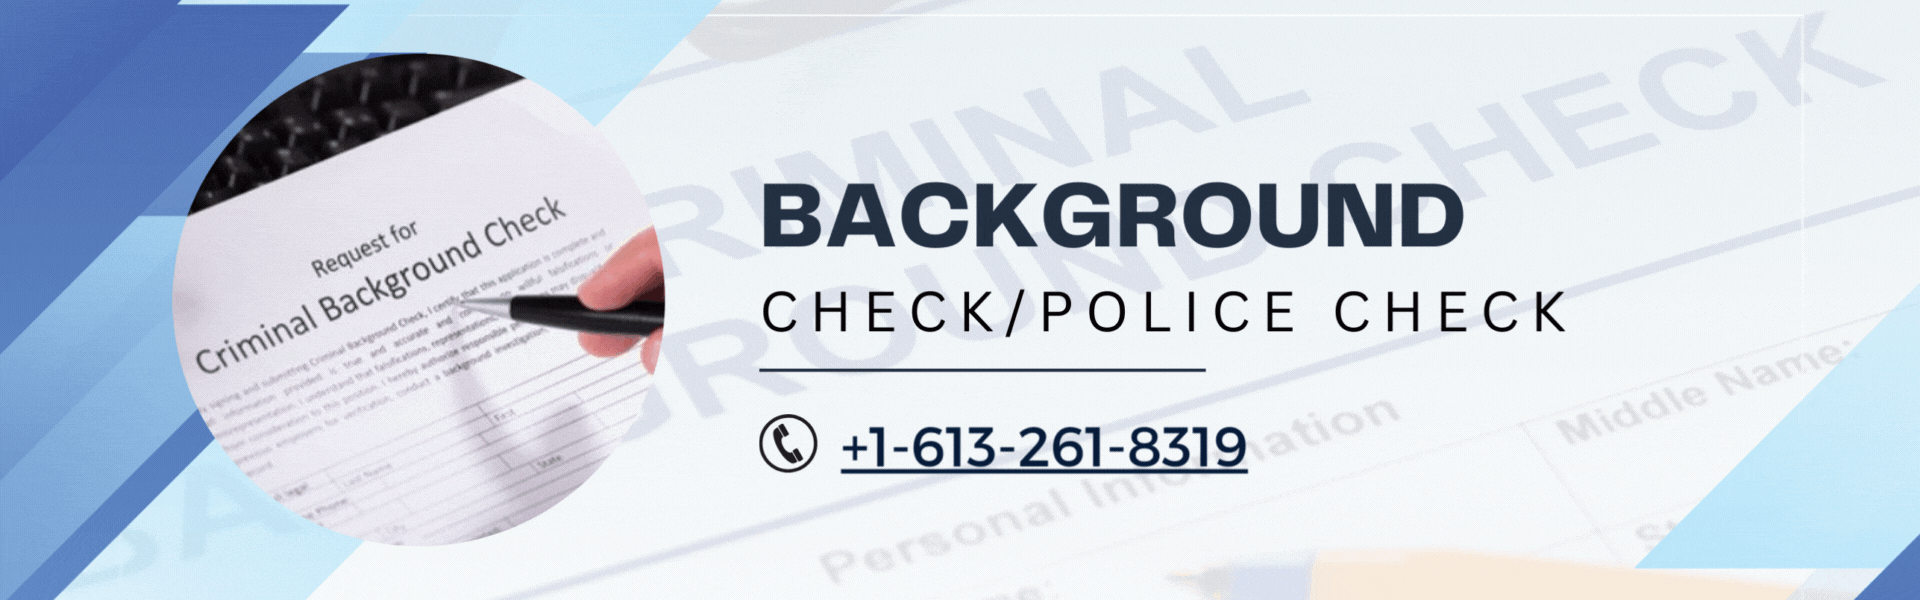 Background Check/Police Check